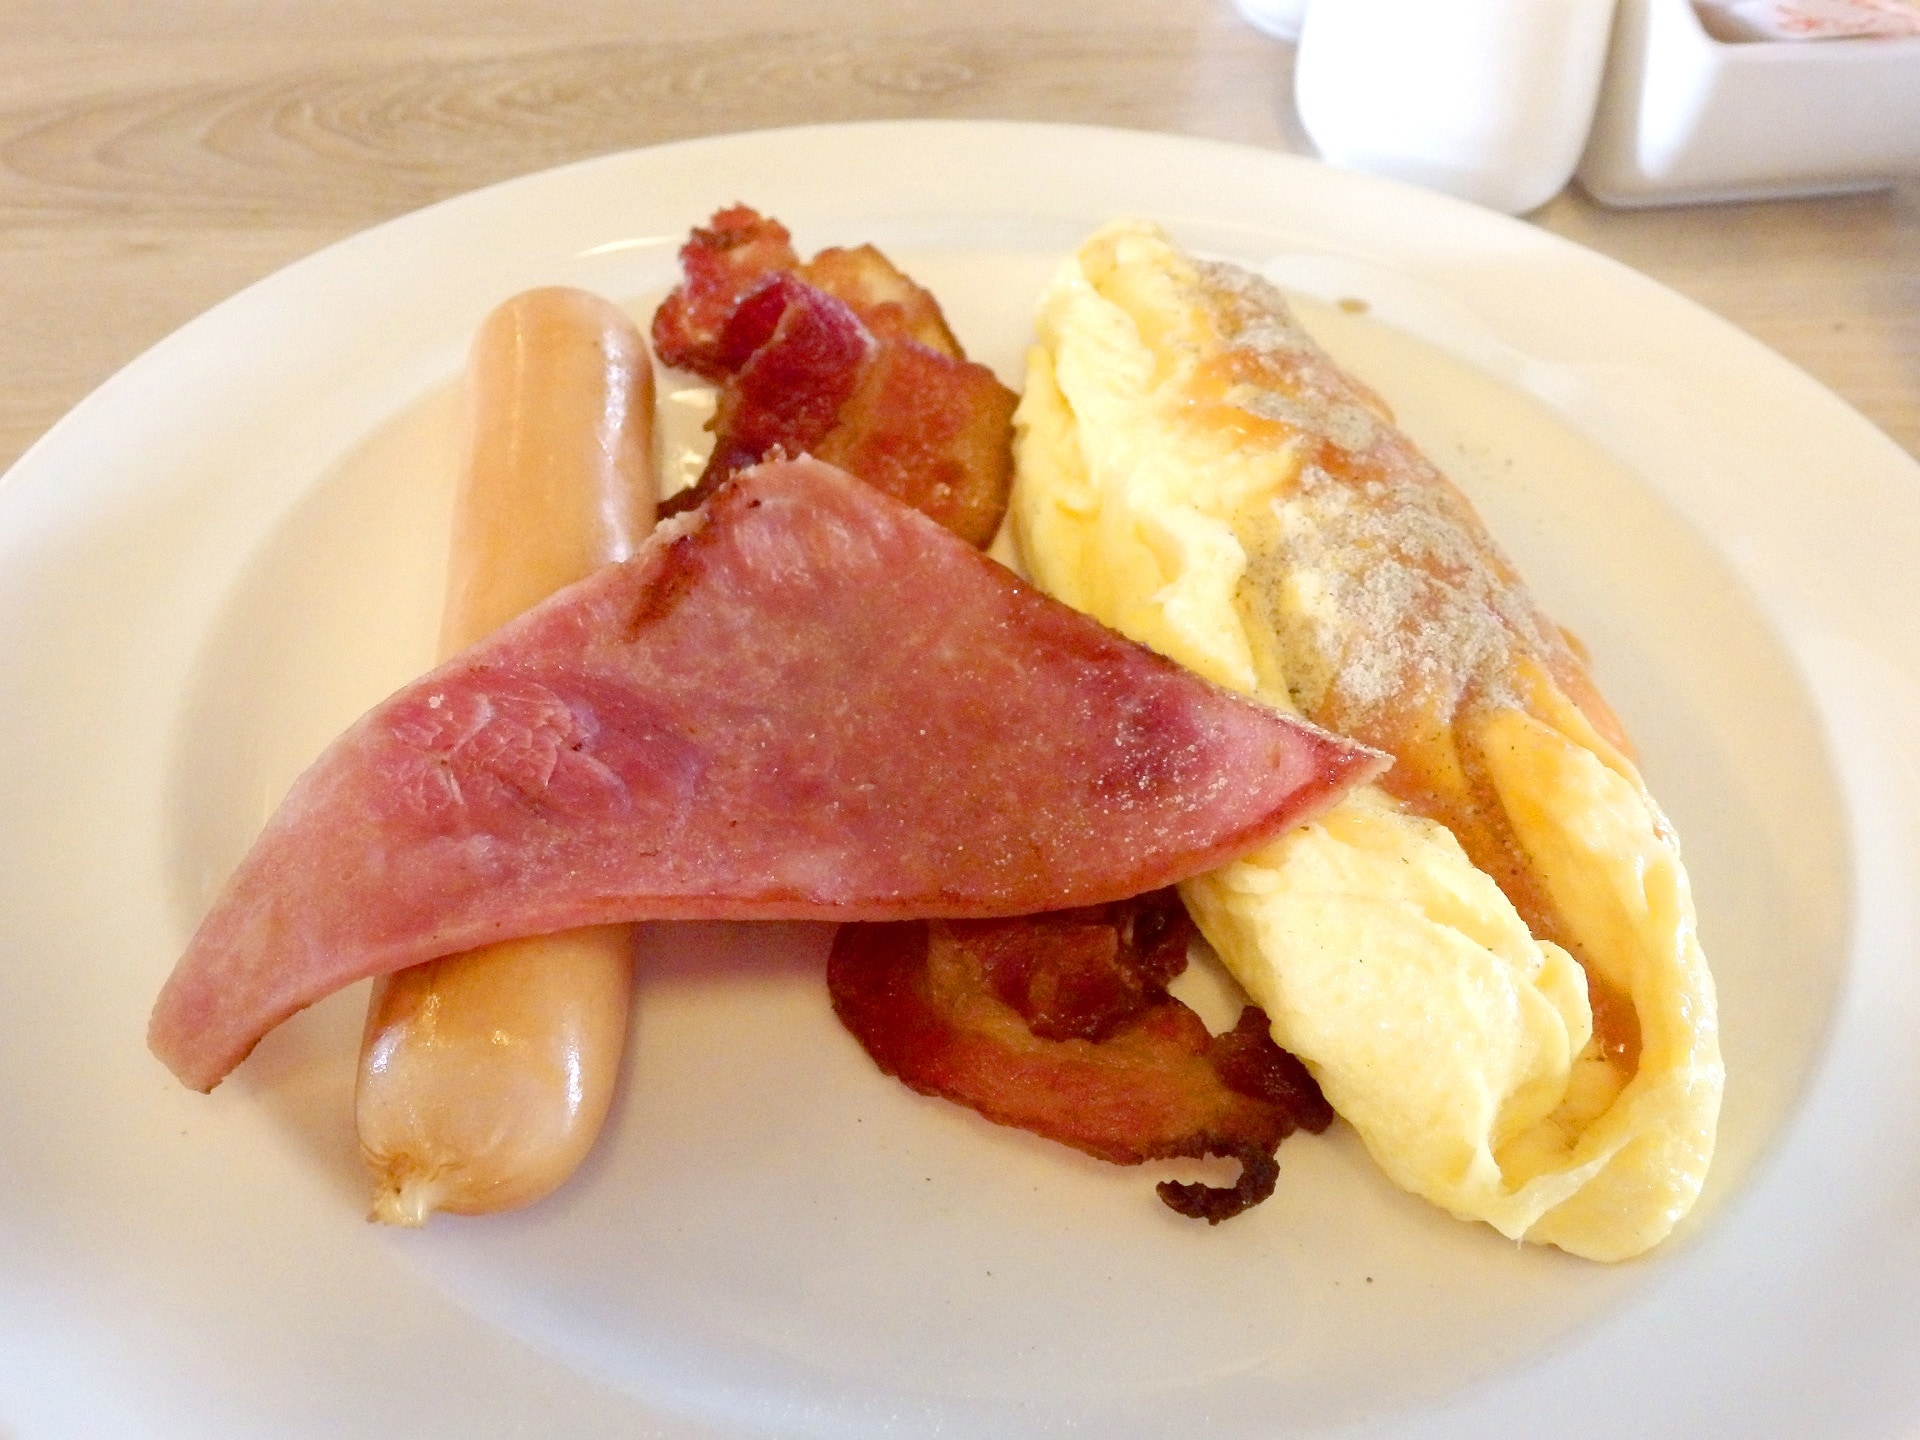 egg, hotdog and ham on plate